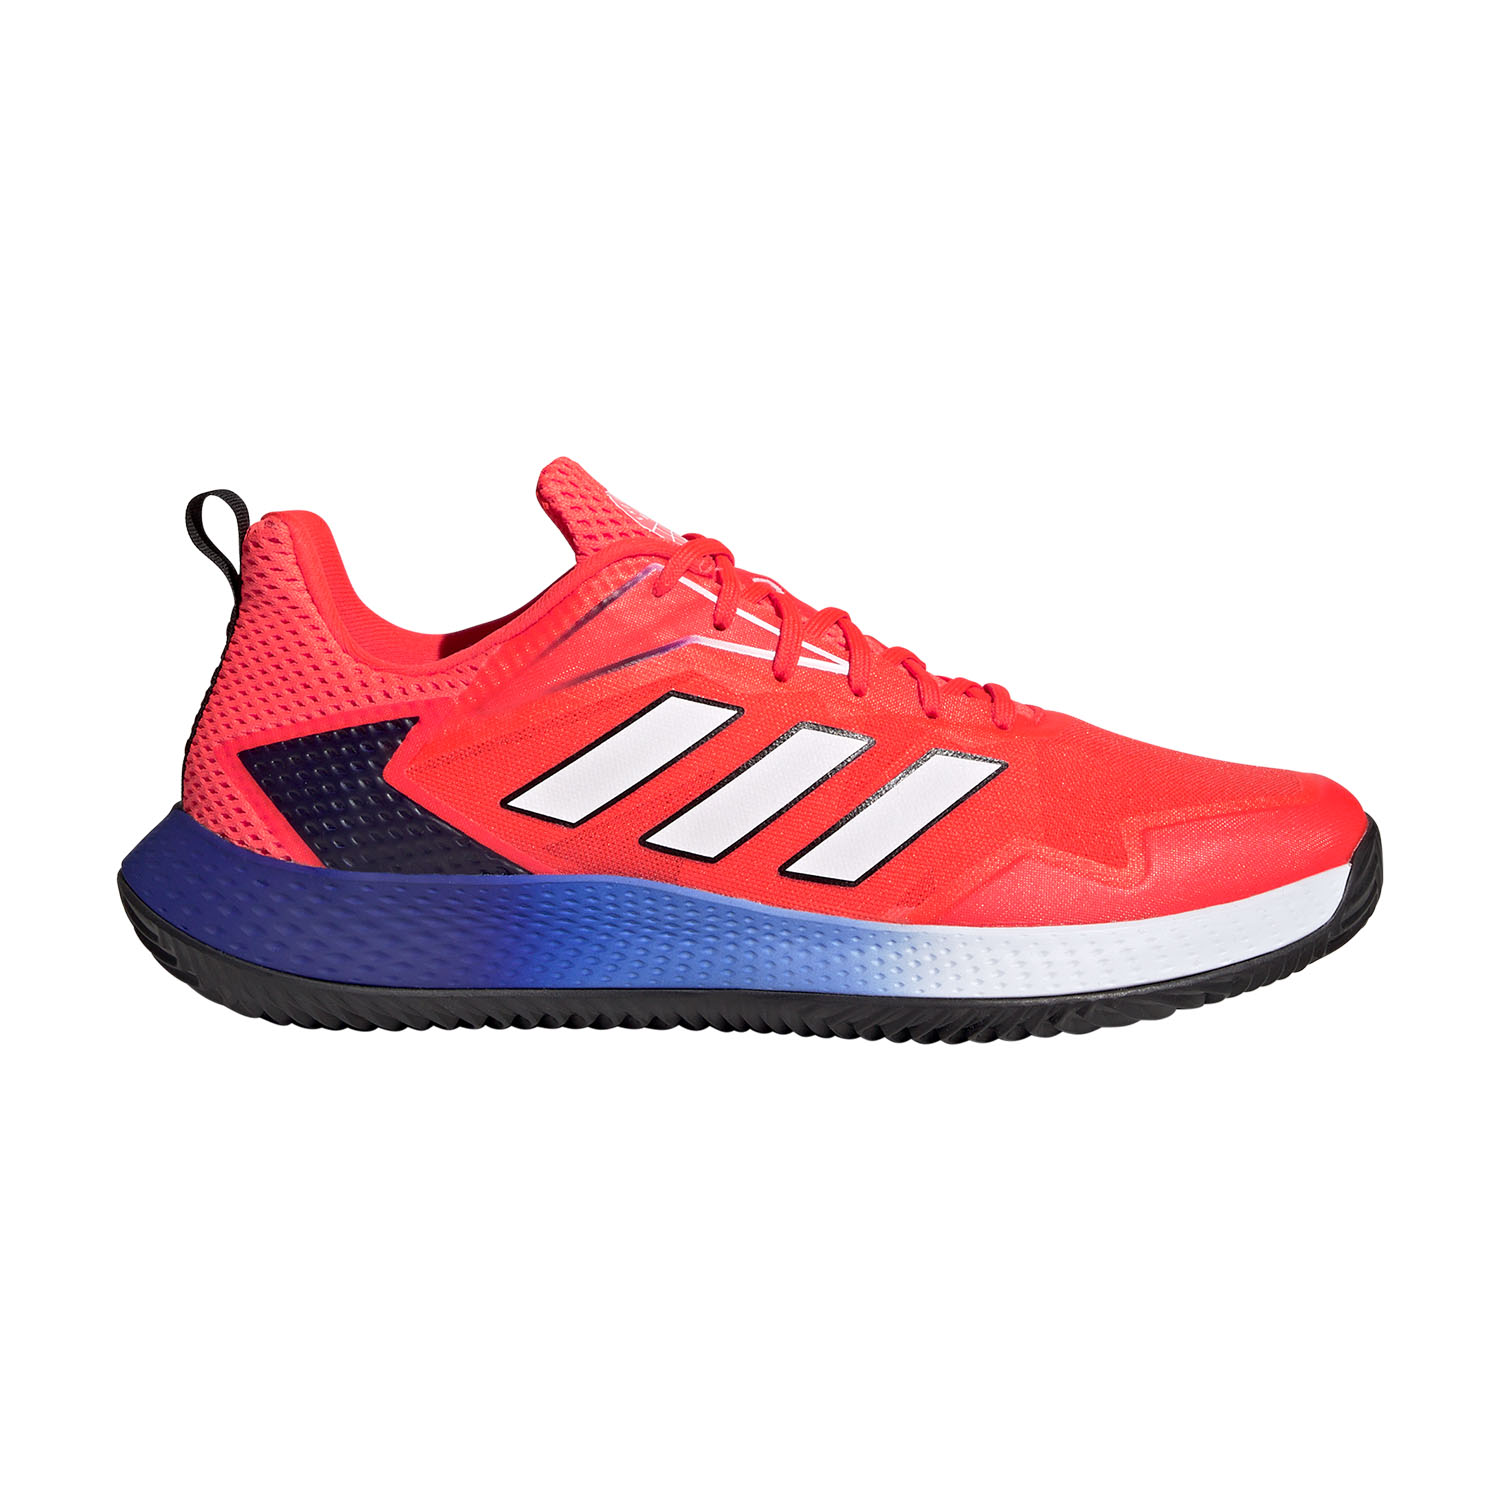 adidas Defiant Speed Clay - Solar Red/Ftwr White/Lucid Blue